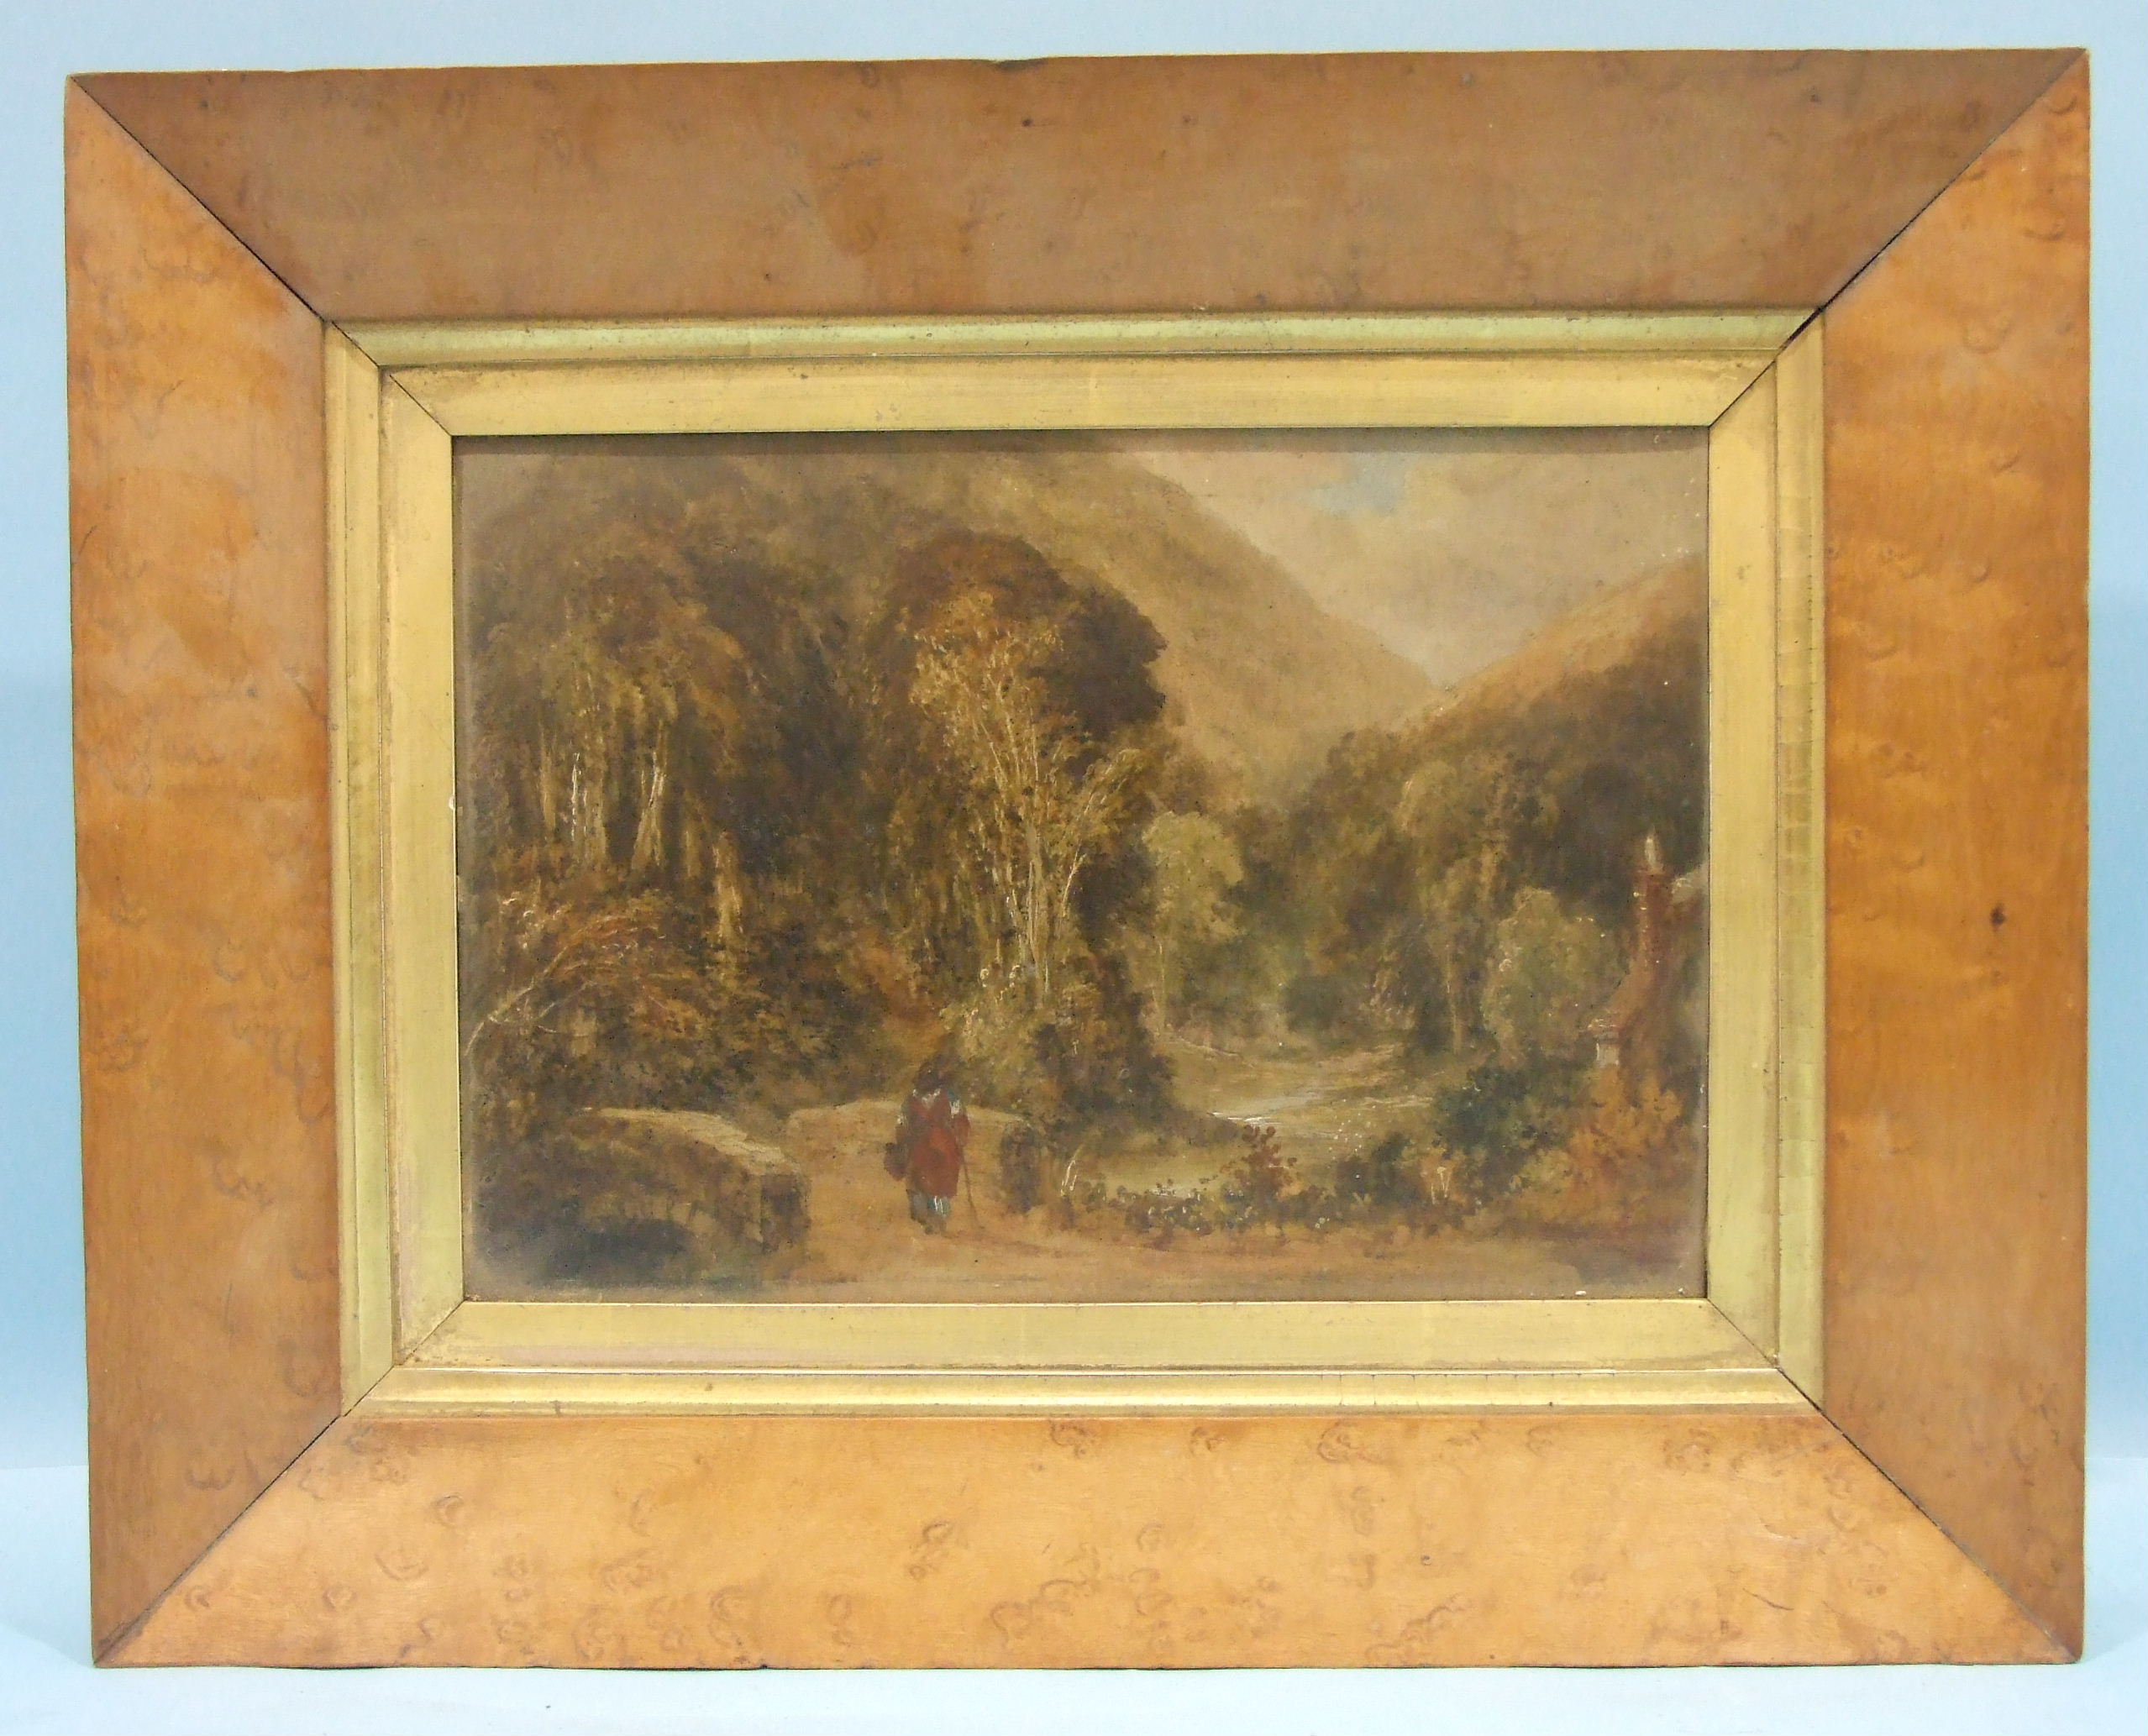 19th century Continental School, 'Figure crossing a bridge in a mountainous landscape', unsigned oil - Image 2 of 2